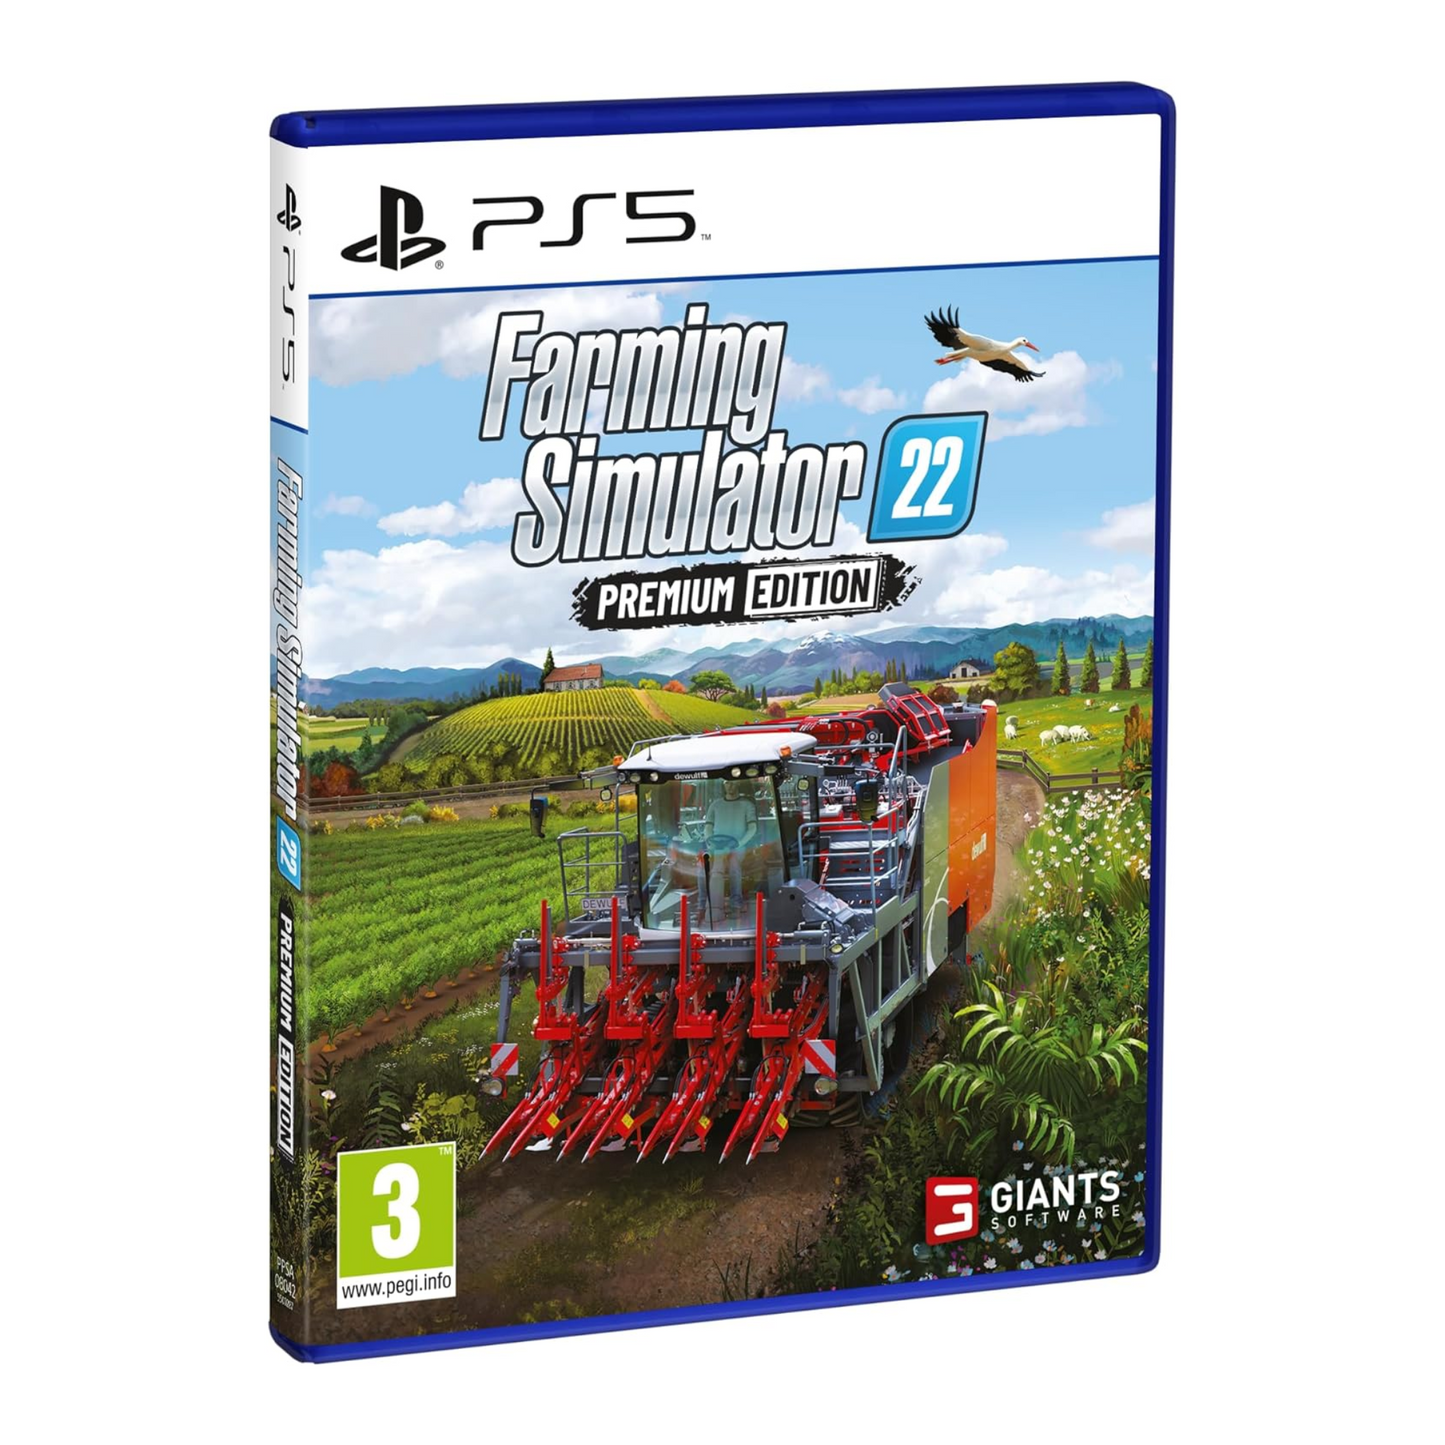 Farming Simulator 22 Premium Edition Video Game for Playstation 5